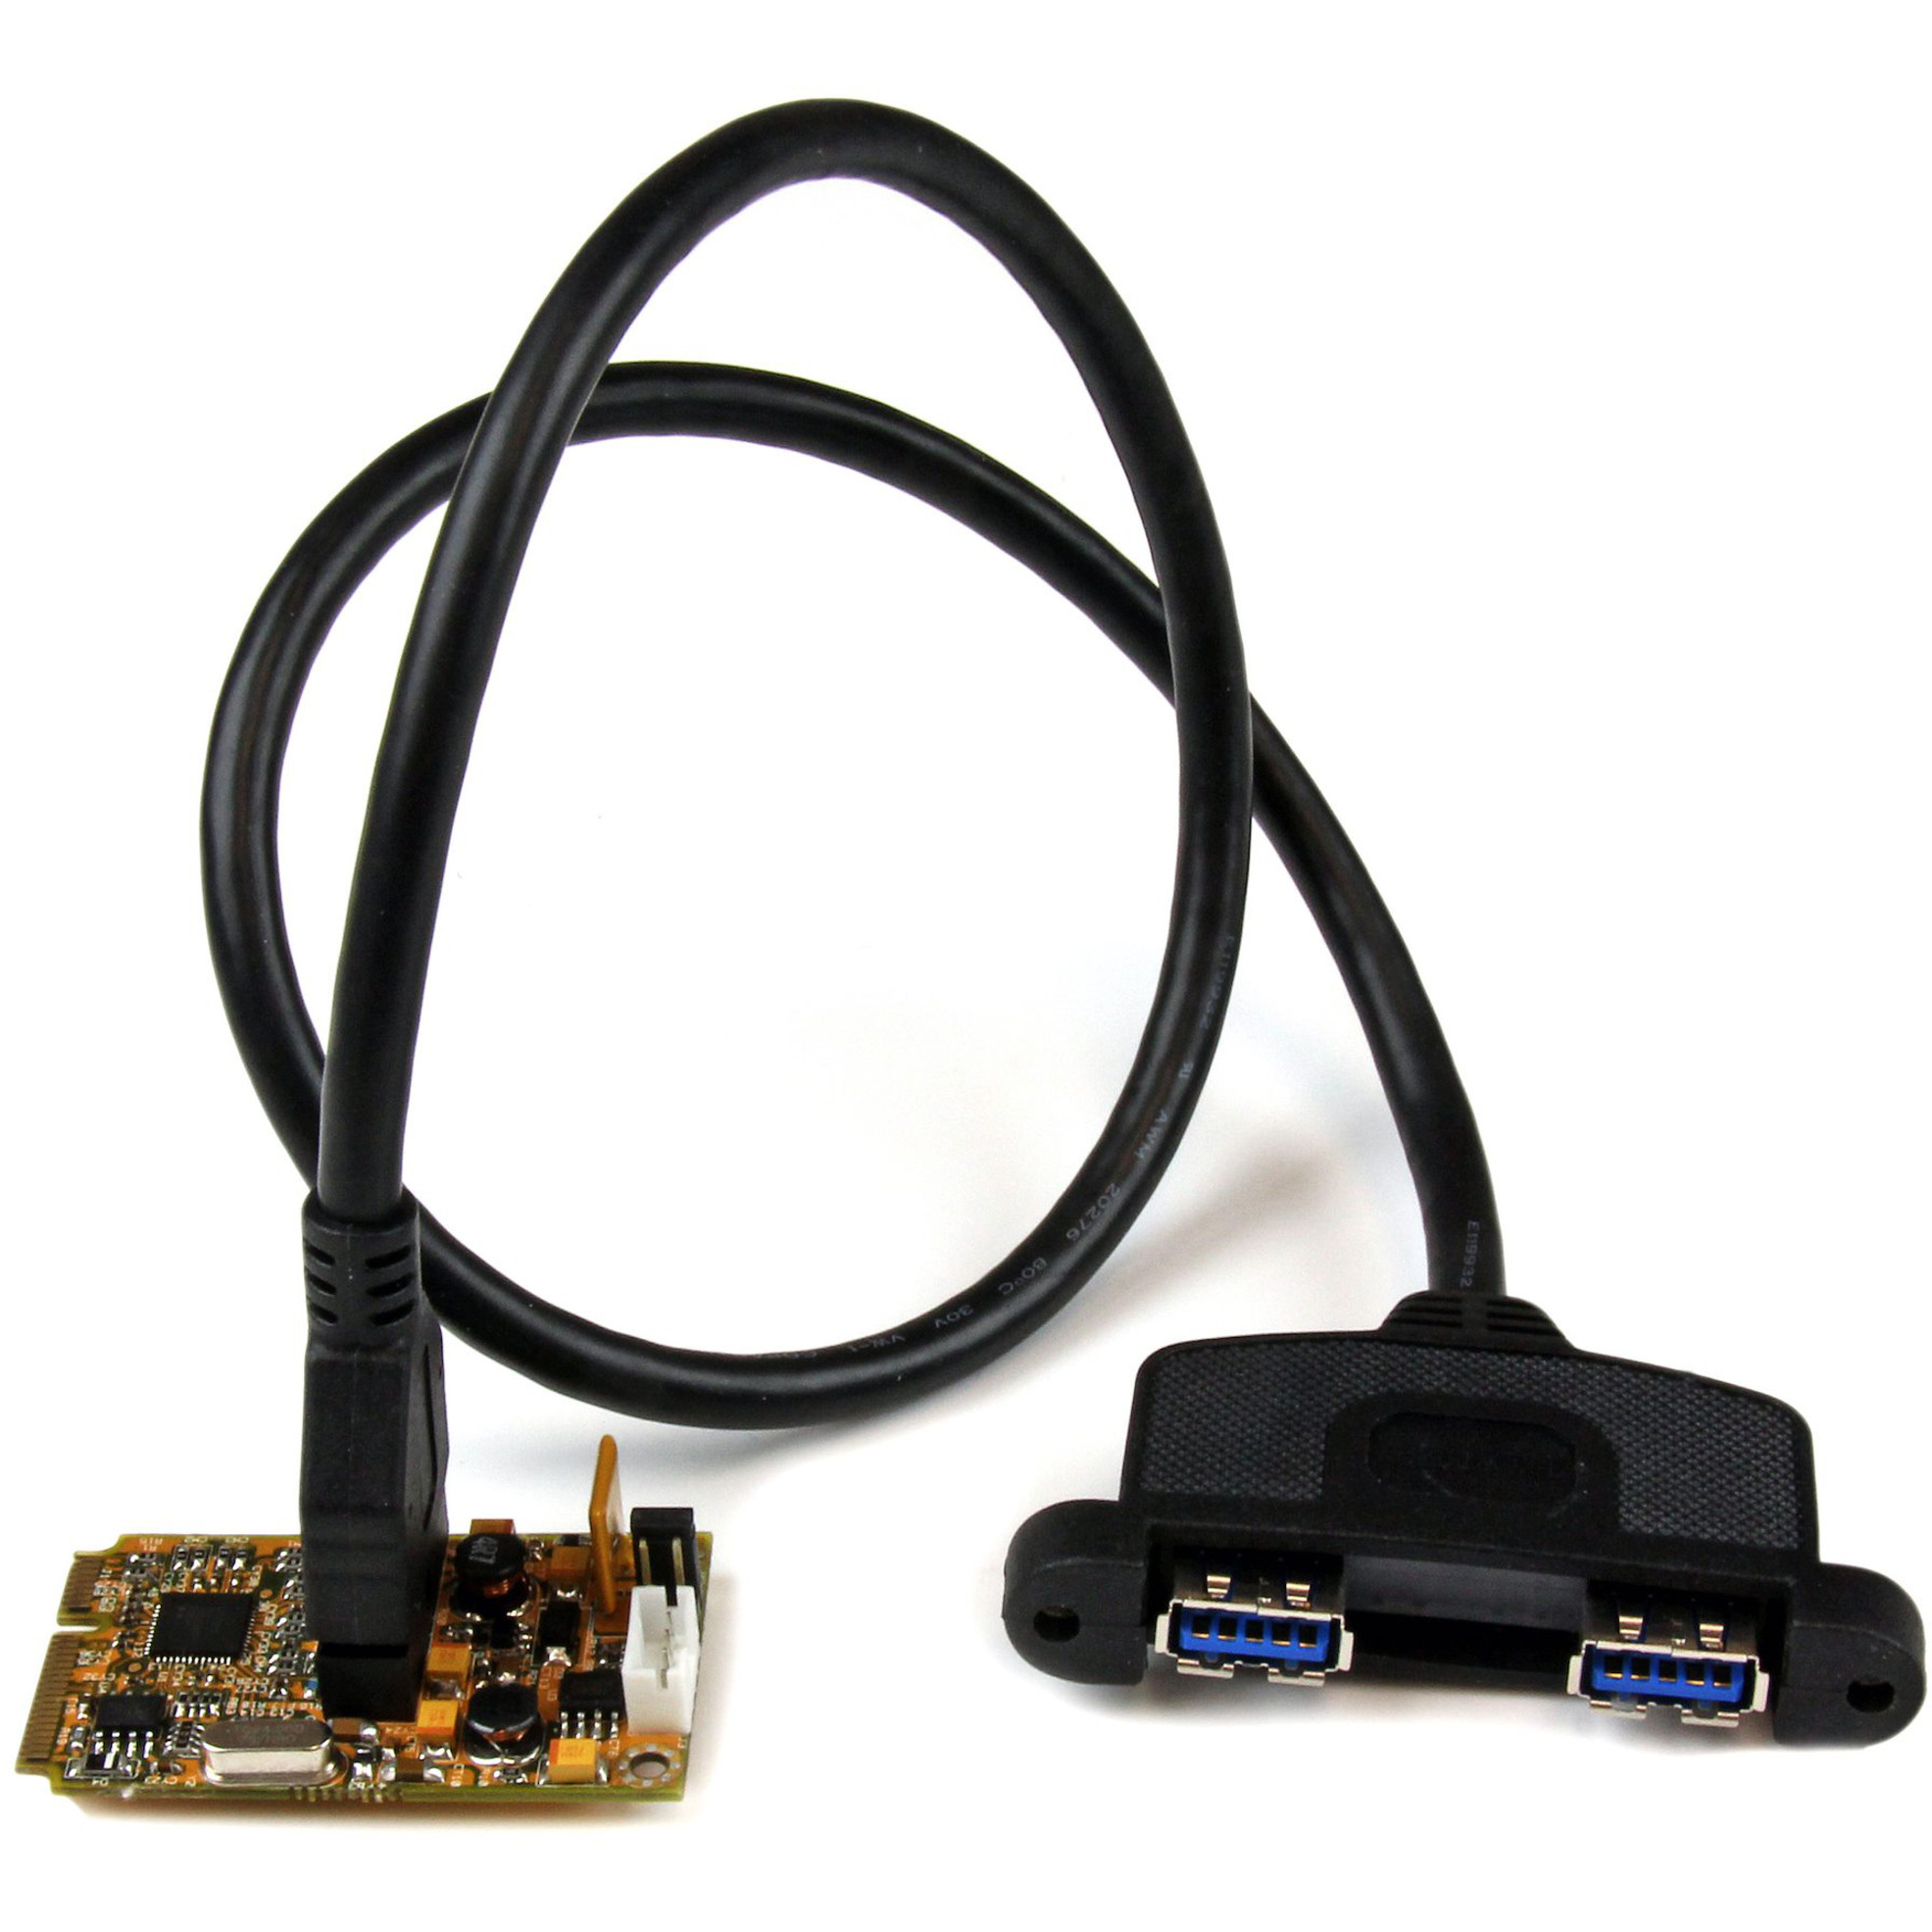 Startech .com Port SuperSpeed Mini PCI Express USB 3.0 Adapter Card w/ Bracket Kit and SupportAdd two USB 3.0 ports through a Mini... MPEXUSB3S22B - Armor